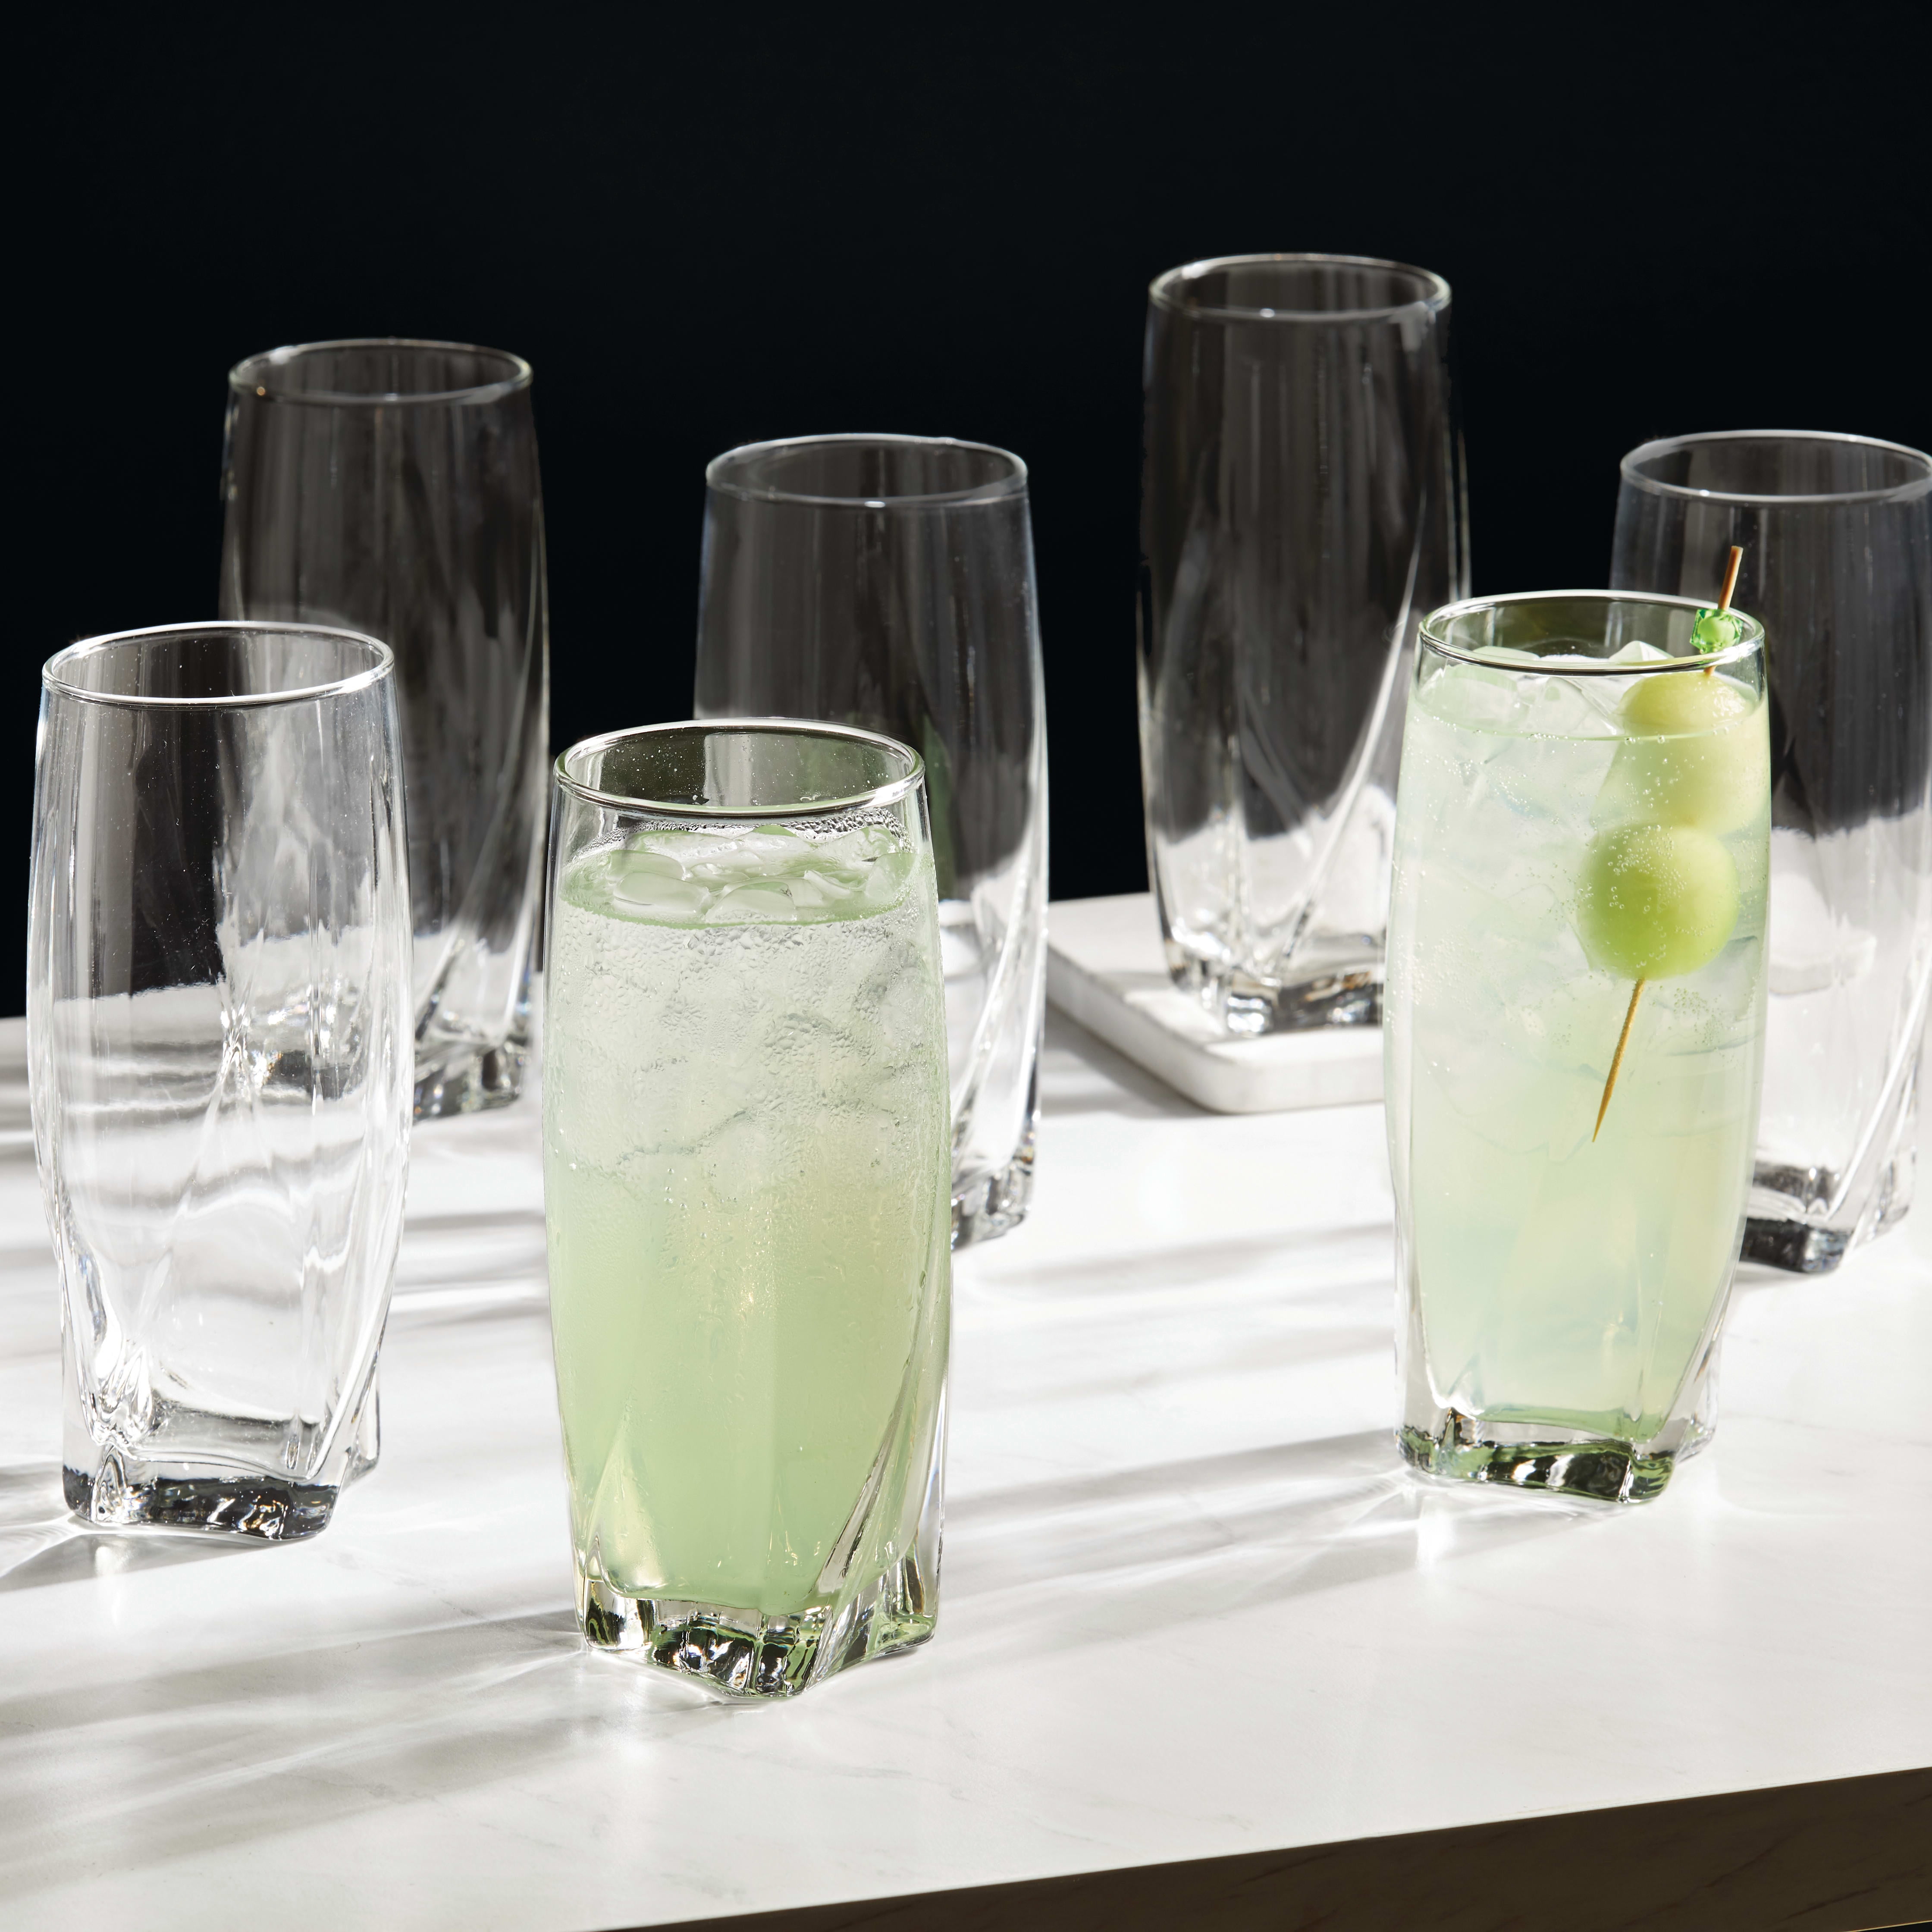 Better Homes & Gardens Reeve Drinking Glasses, 17 oz, Set of 8 